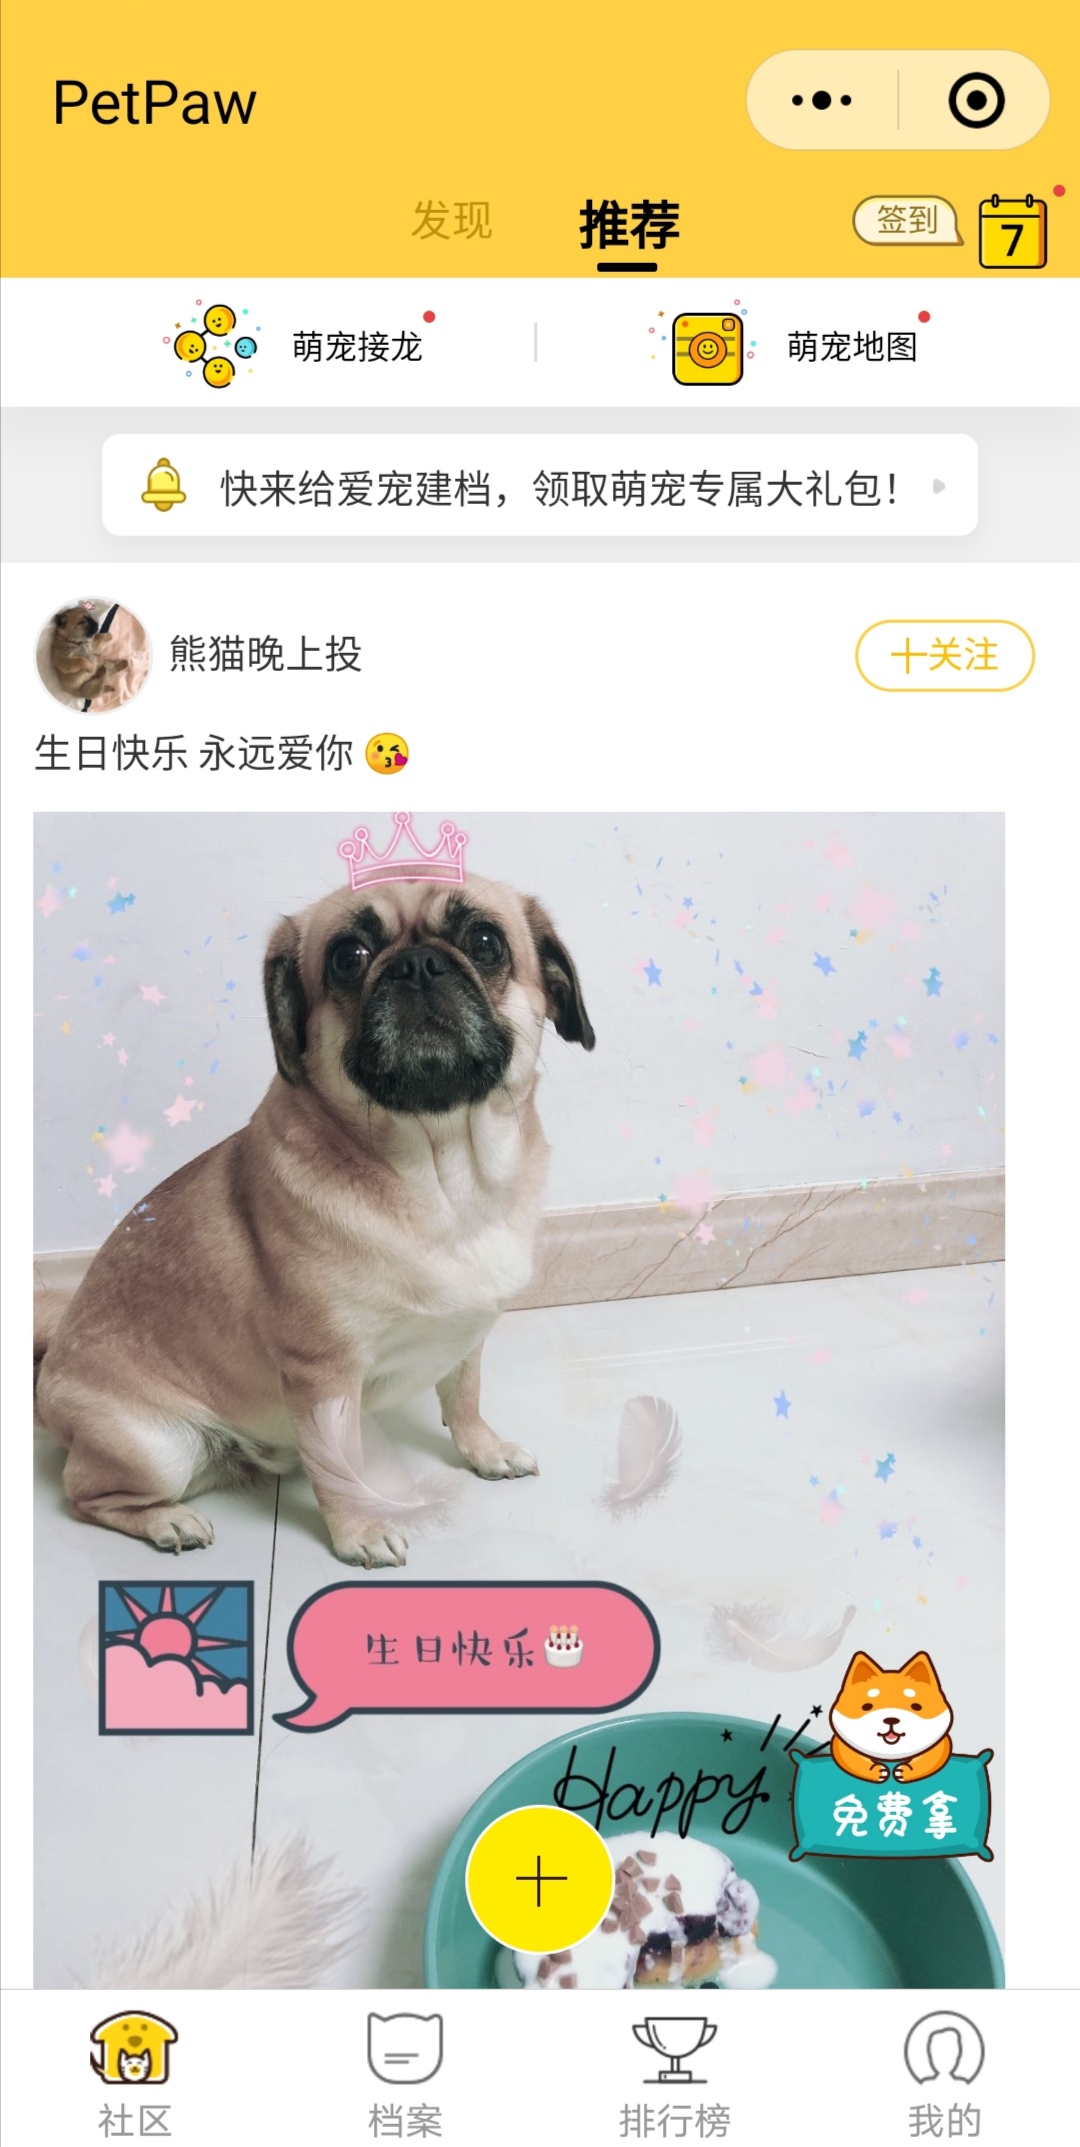 Pet Paw WeChat mini program